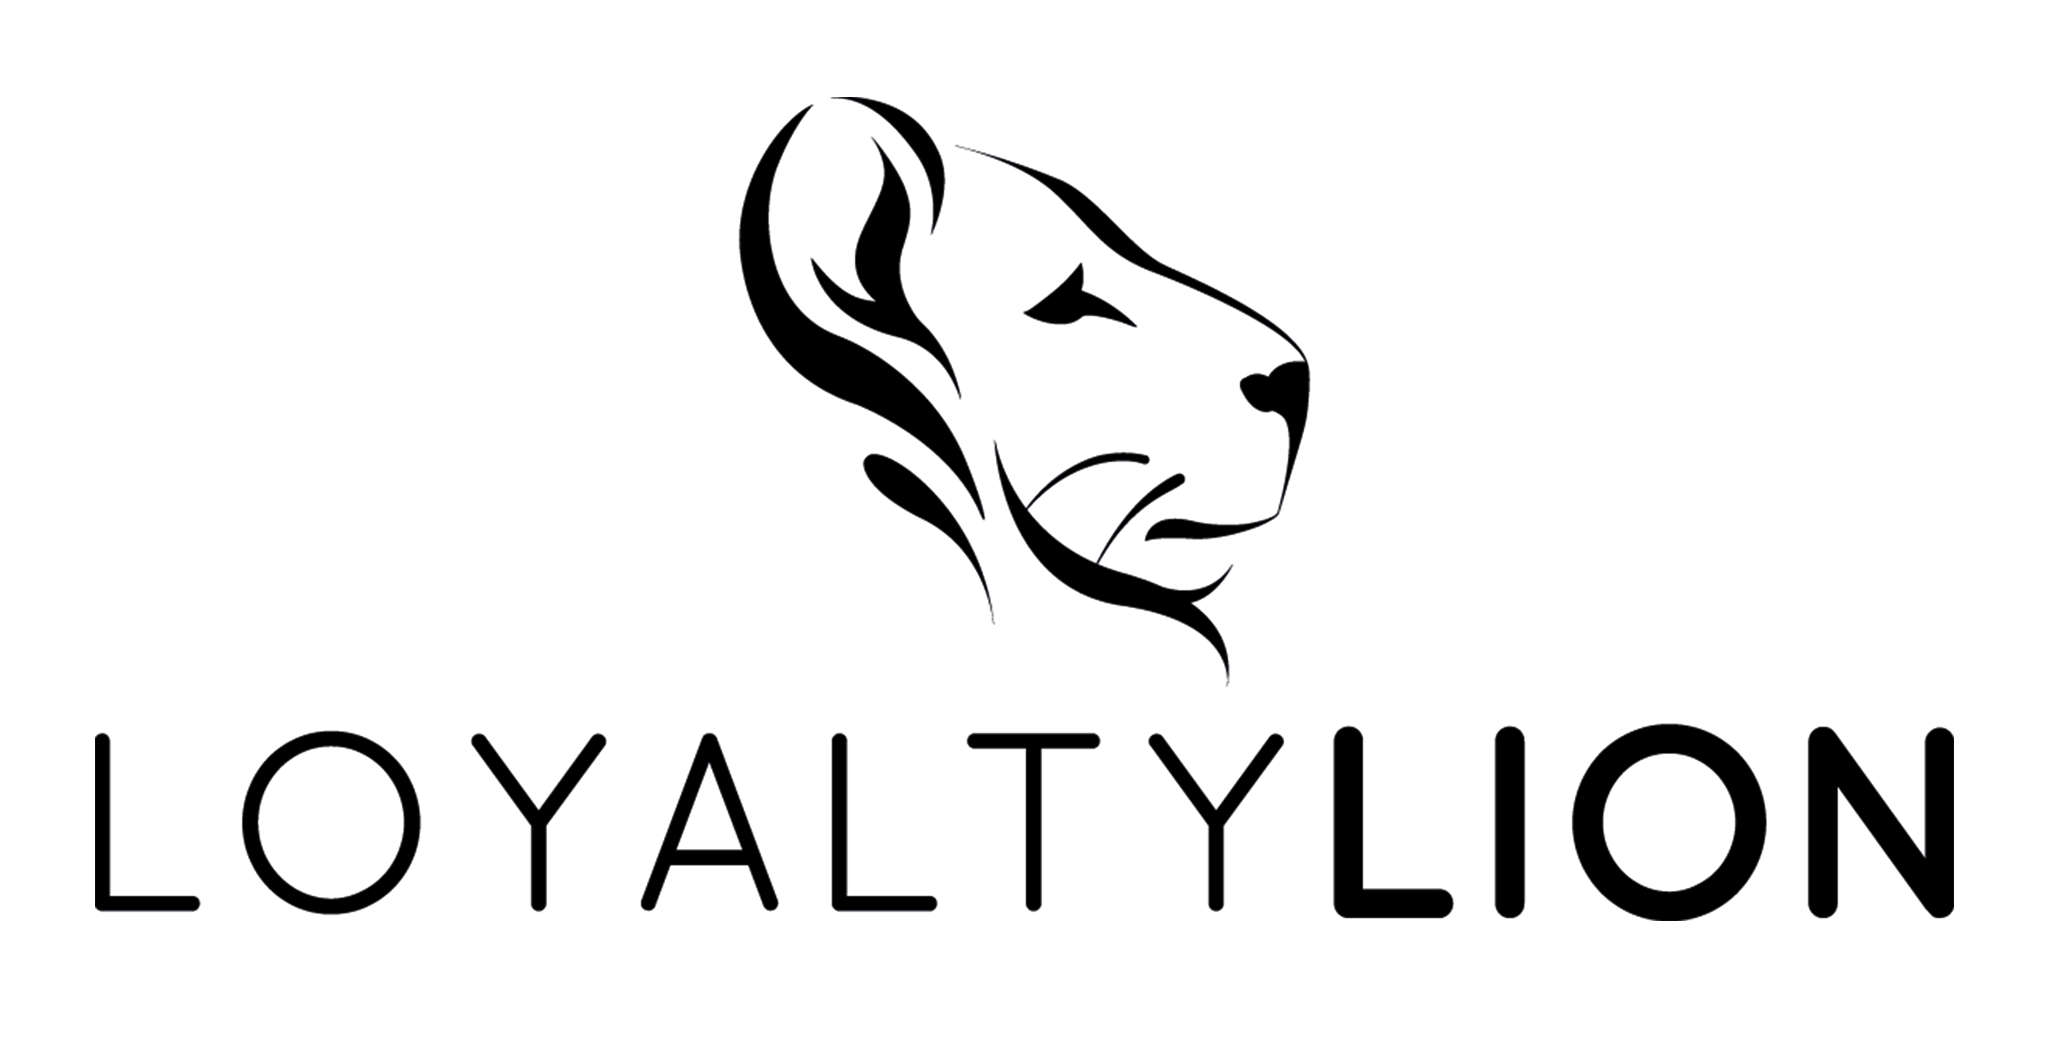 LoyaltyLion - Crunchbase Company Profile & Funding